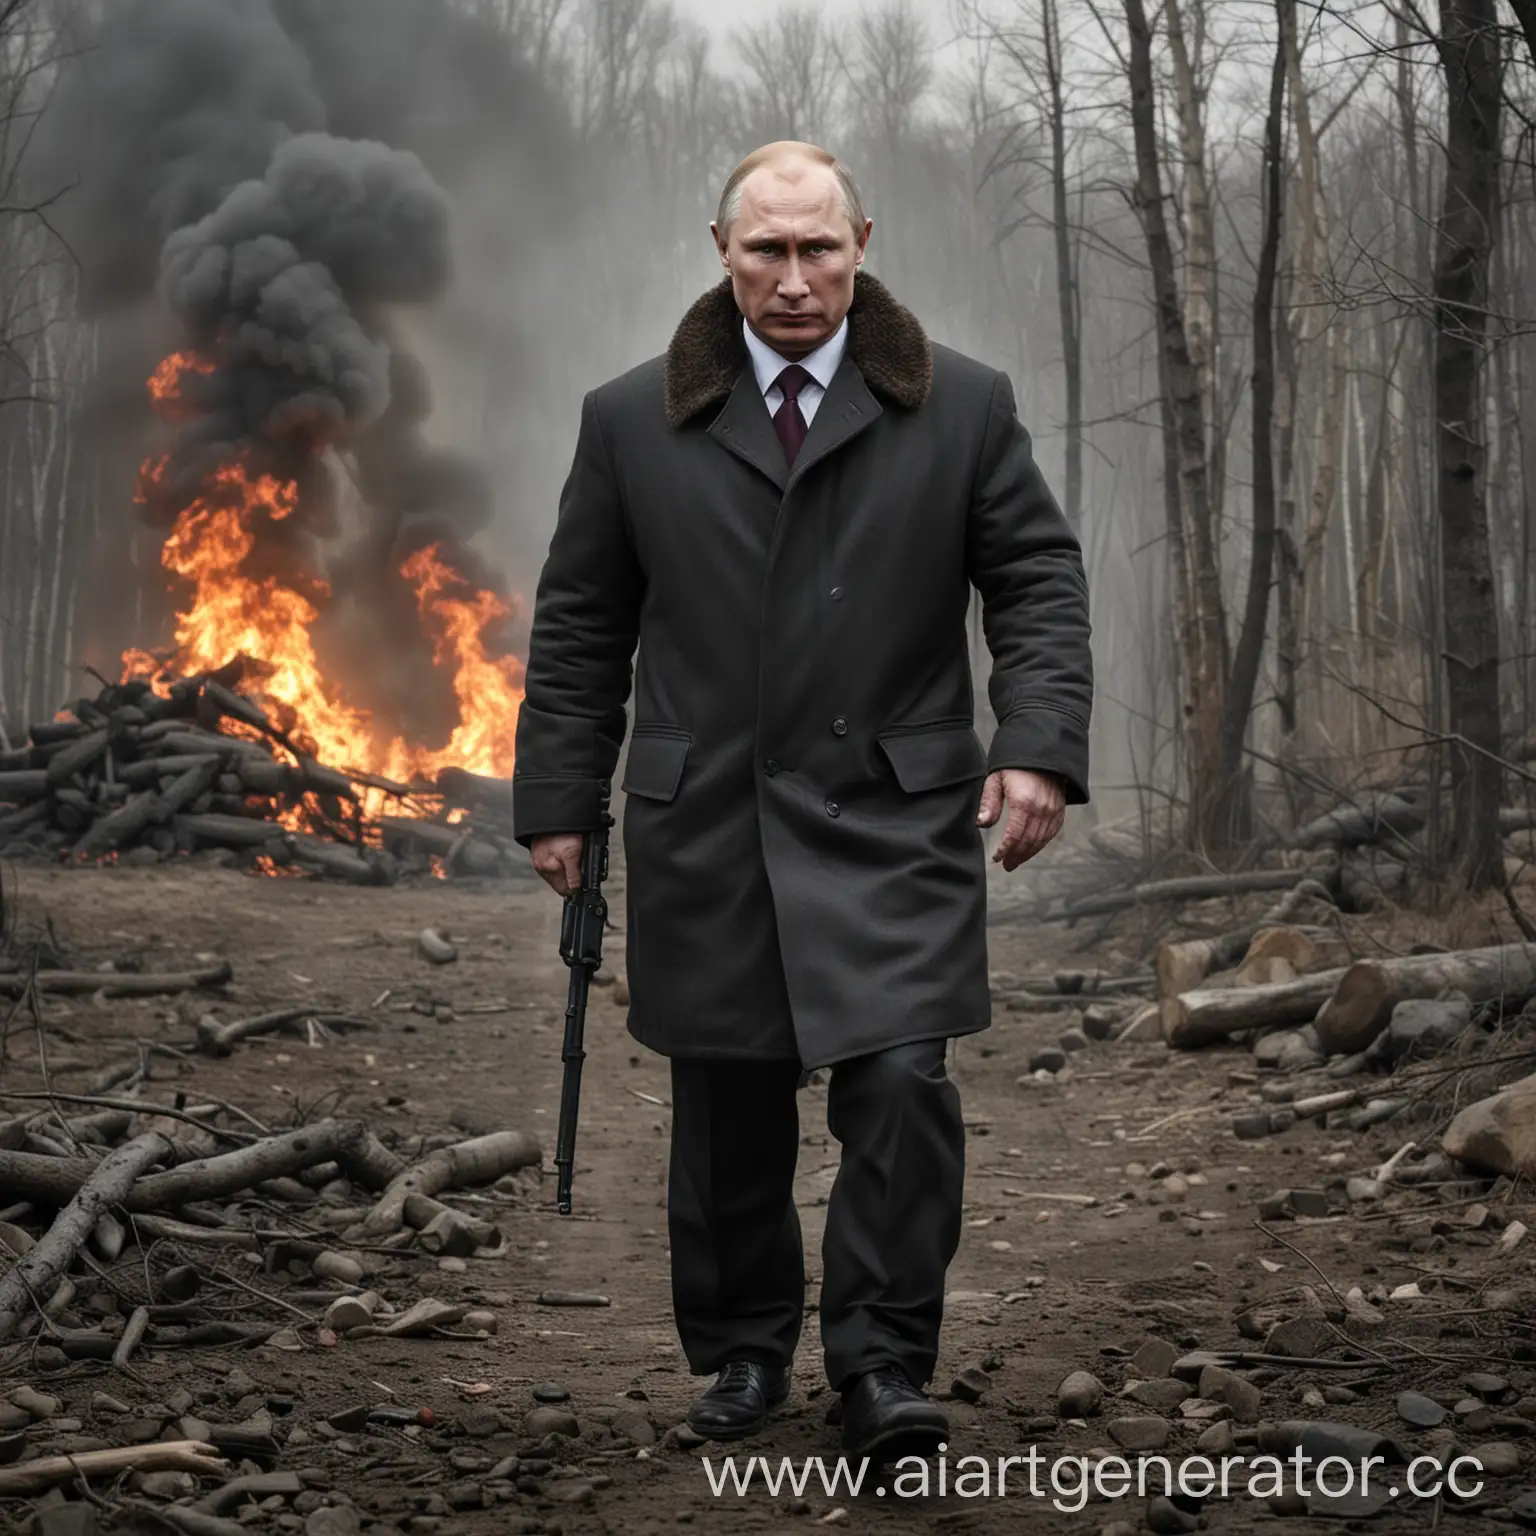 Putins-Photo-Transformed-into-Wrath-of-Man-Style-Image